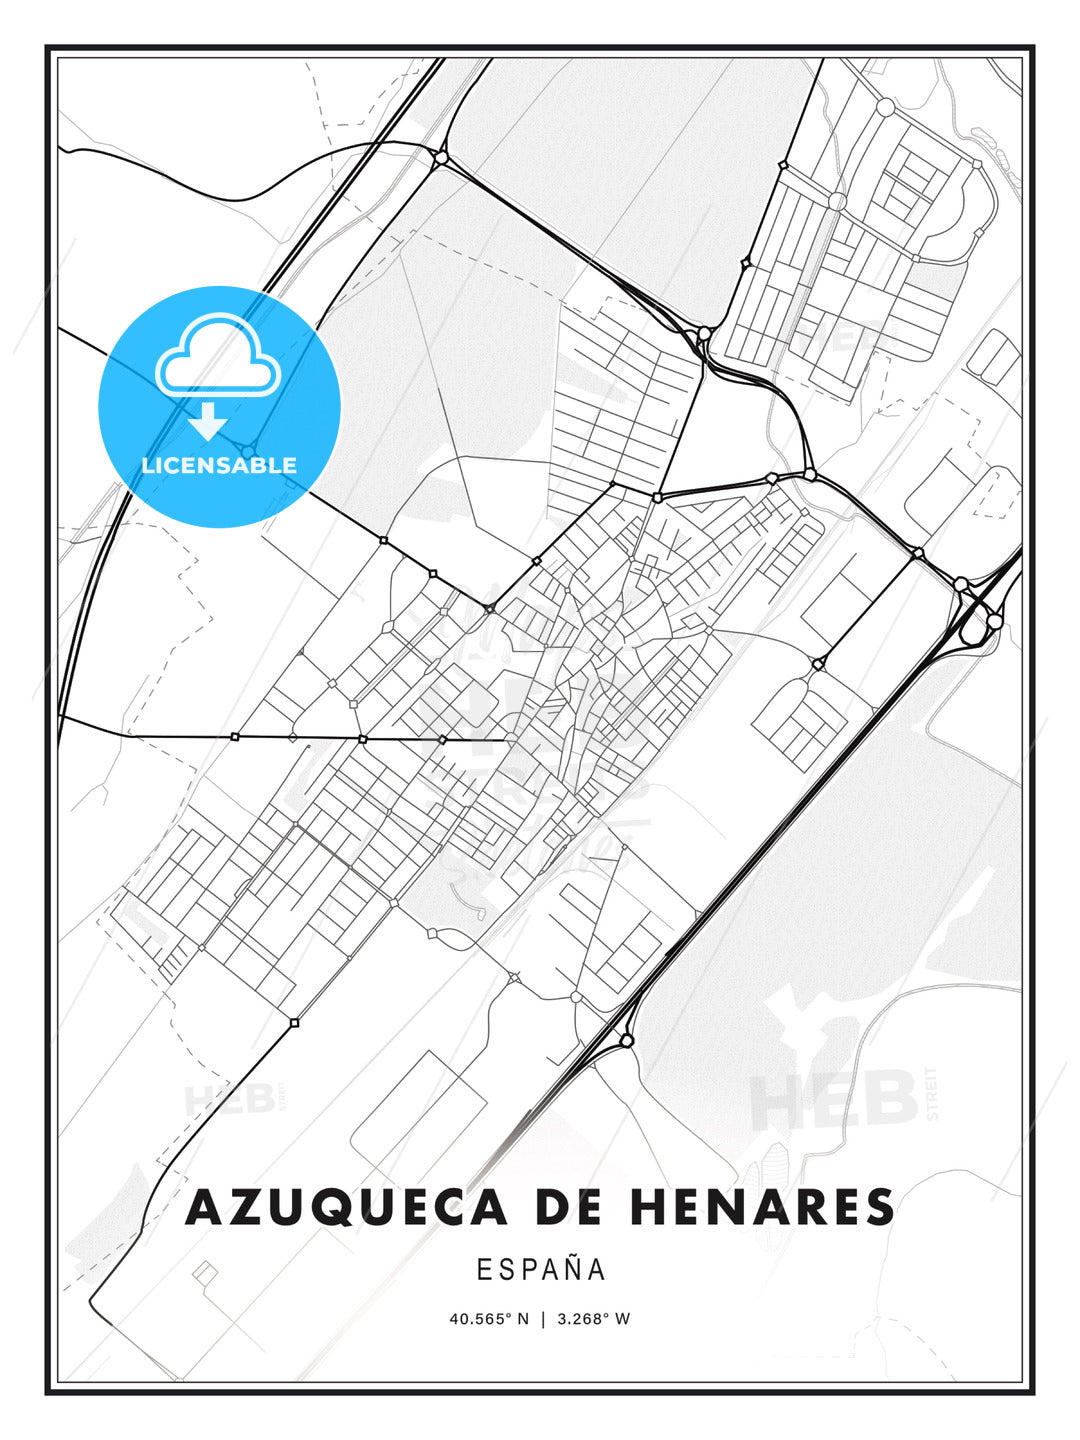 Azuqueca de Henares, Spain, Modern Print Template in Various Formats - HEBSTREITS Sketches